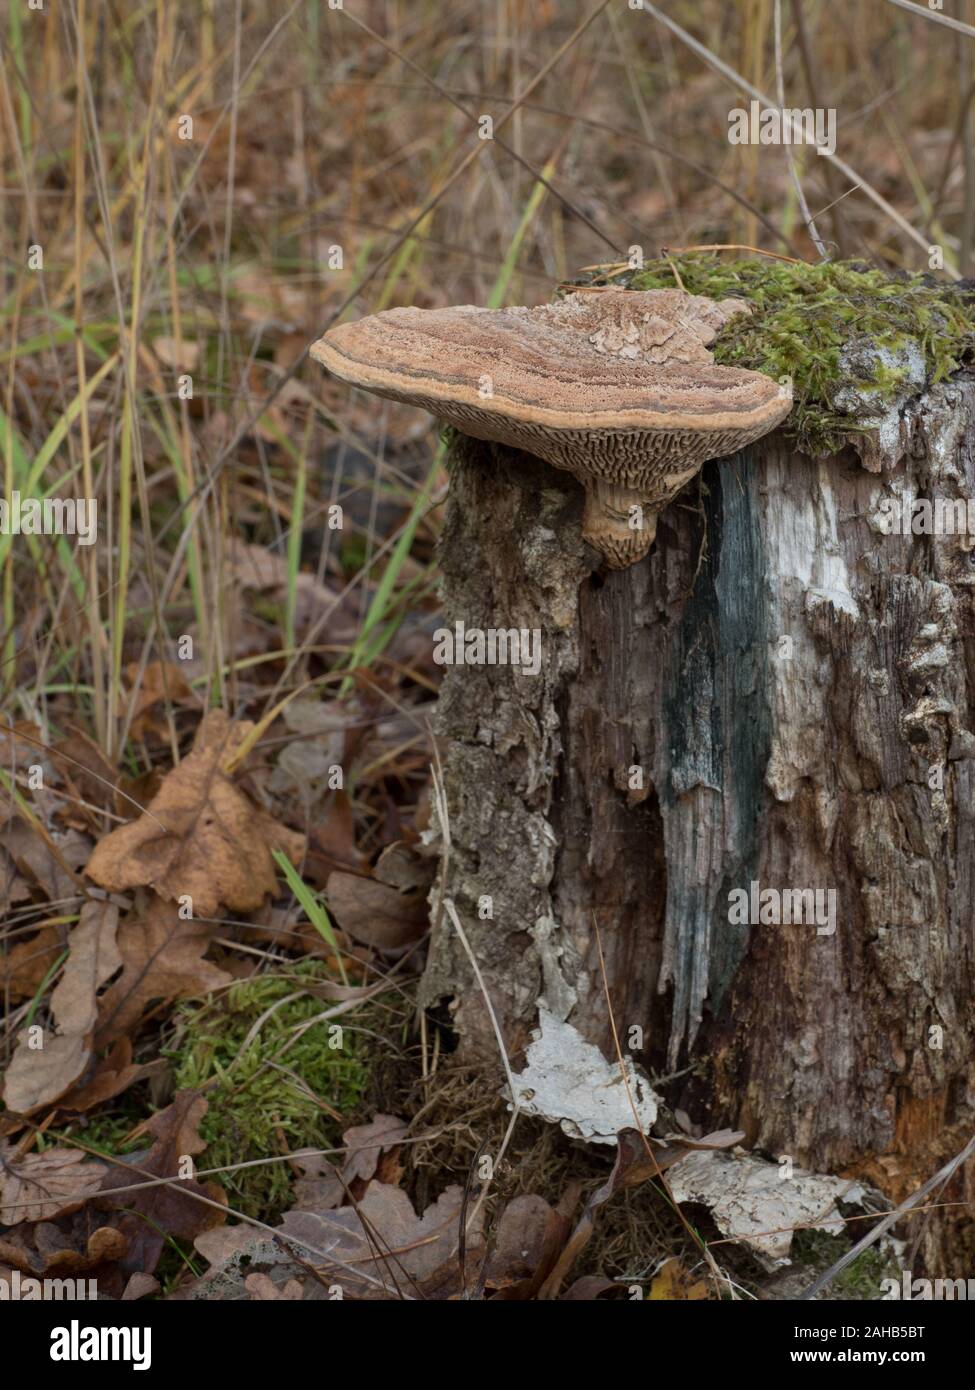 Oak mazegill or maze-gill fungus (Daedalea quercina) growing in Görvälns naturreservat, Järfälla, Sweden Stock Photo